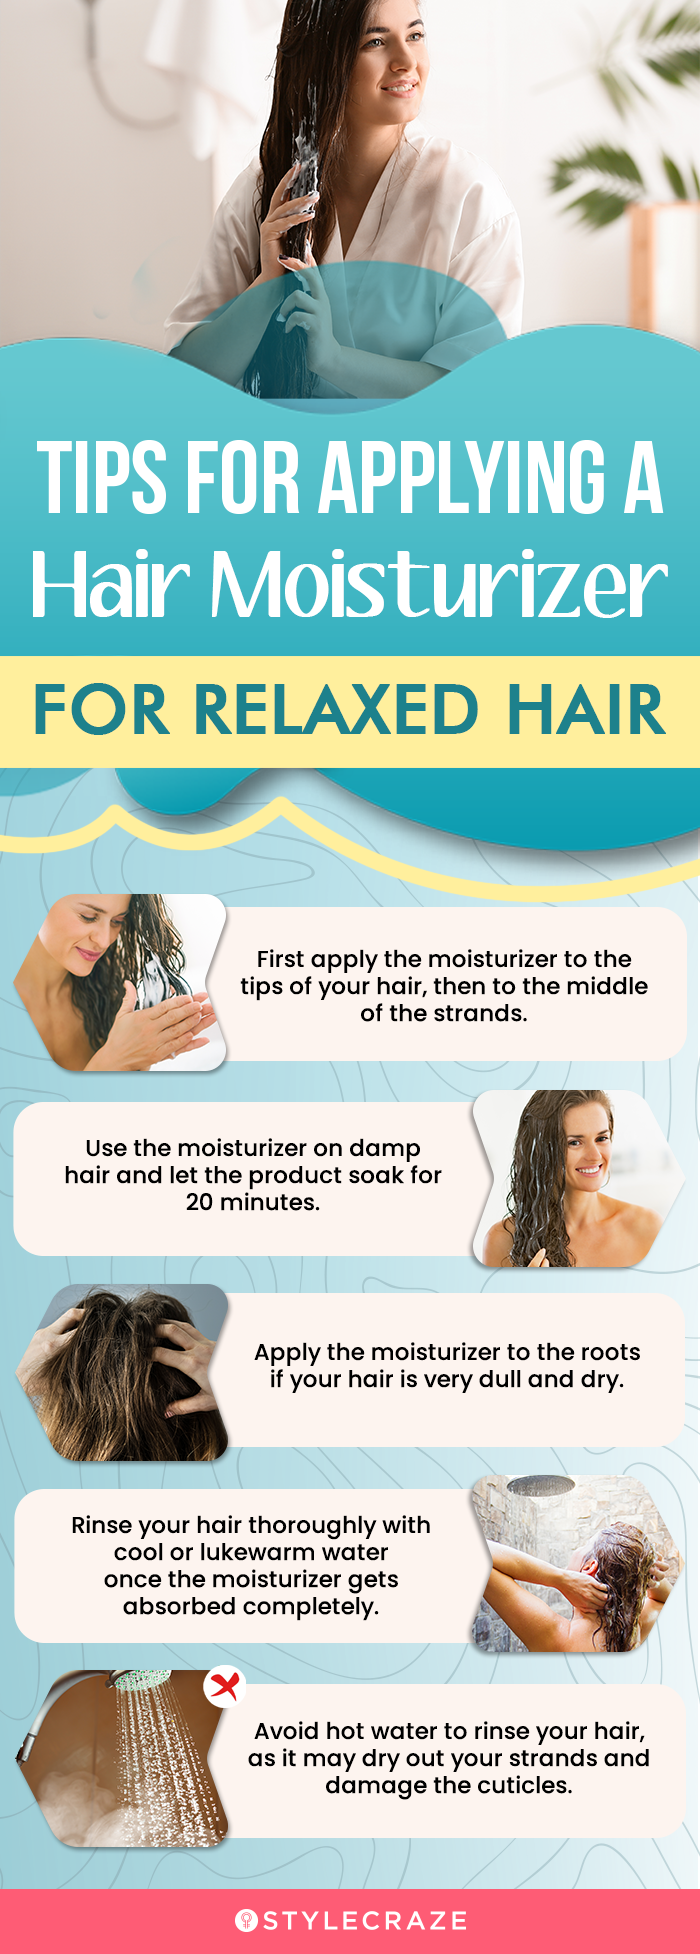 Tips For Applying Hair Moisturizer For Relaxed Hair (infographic)